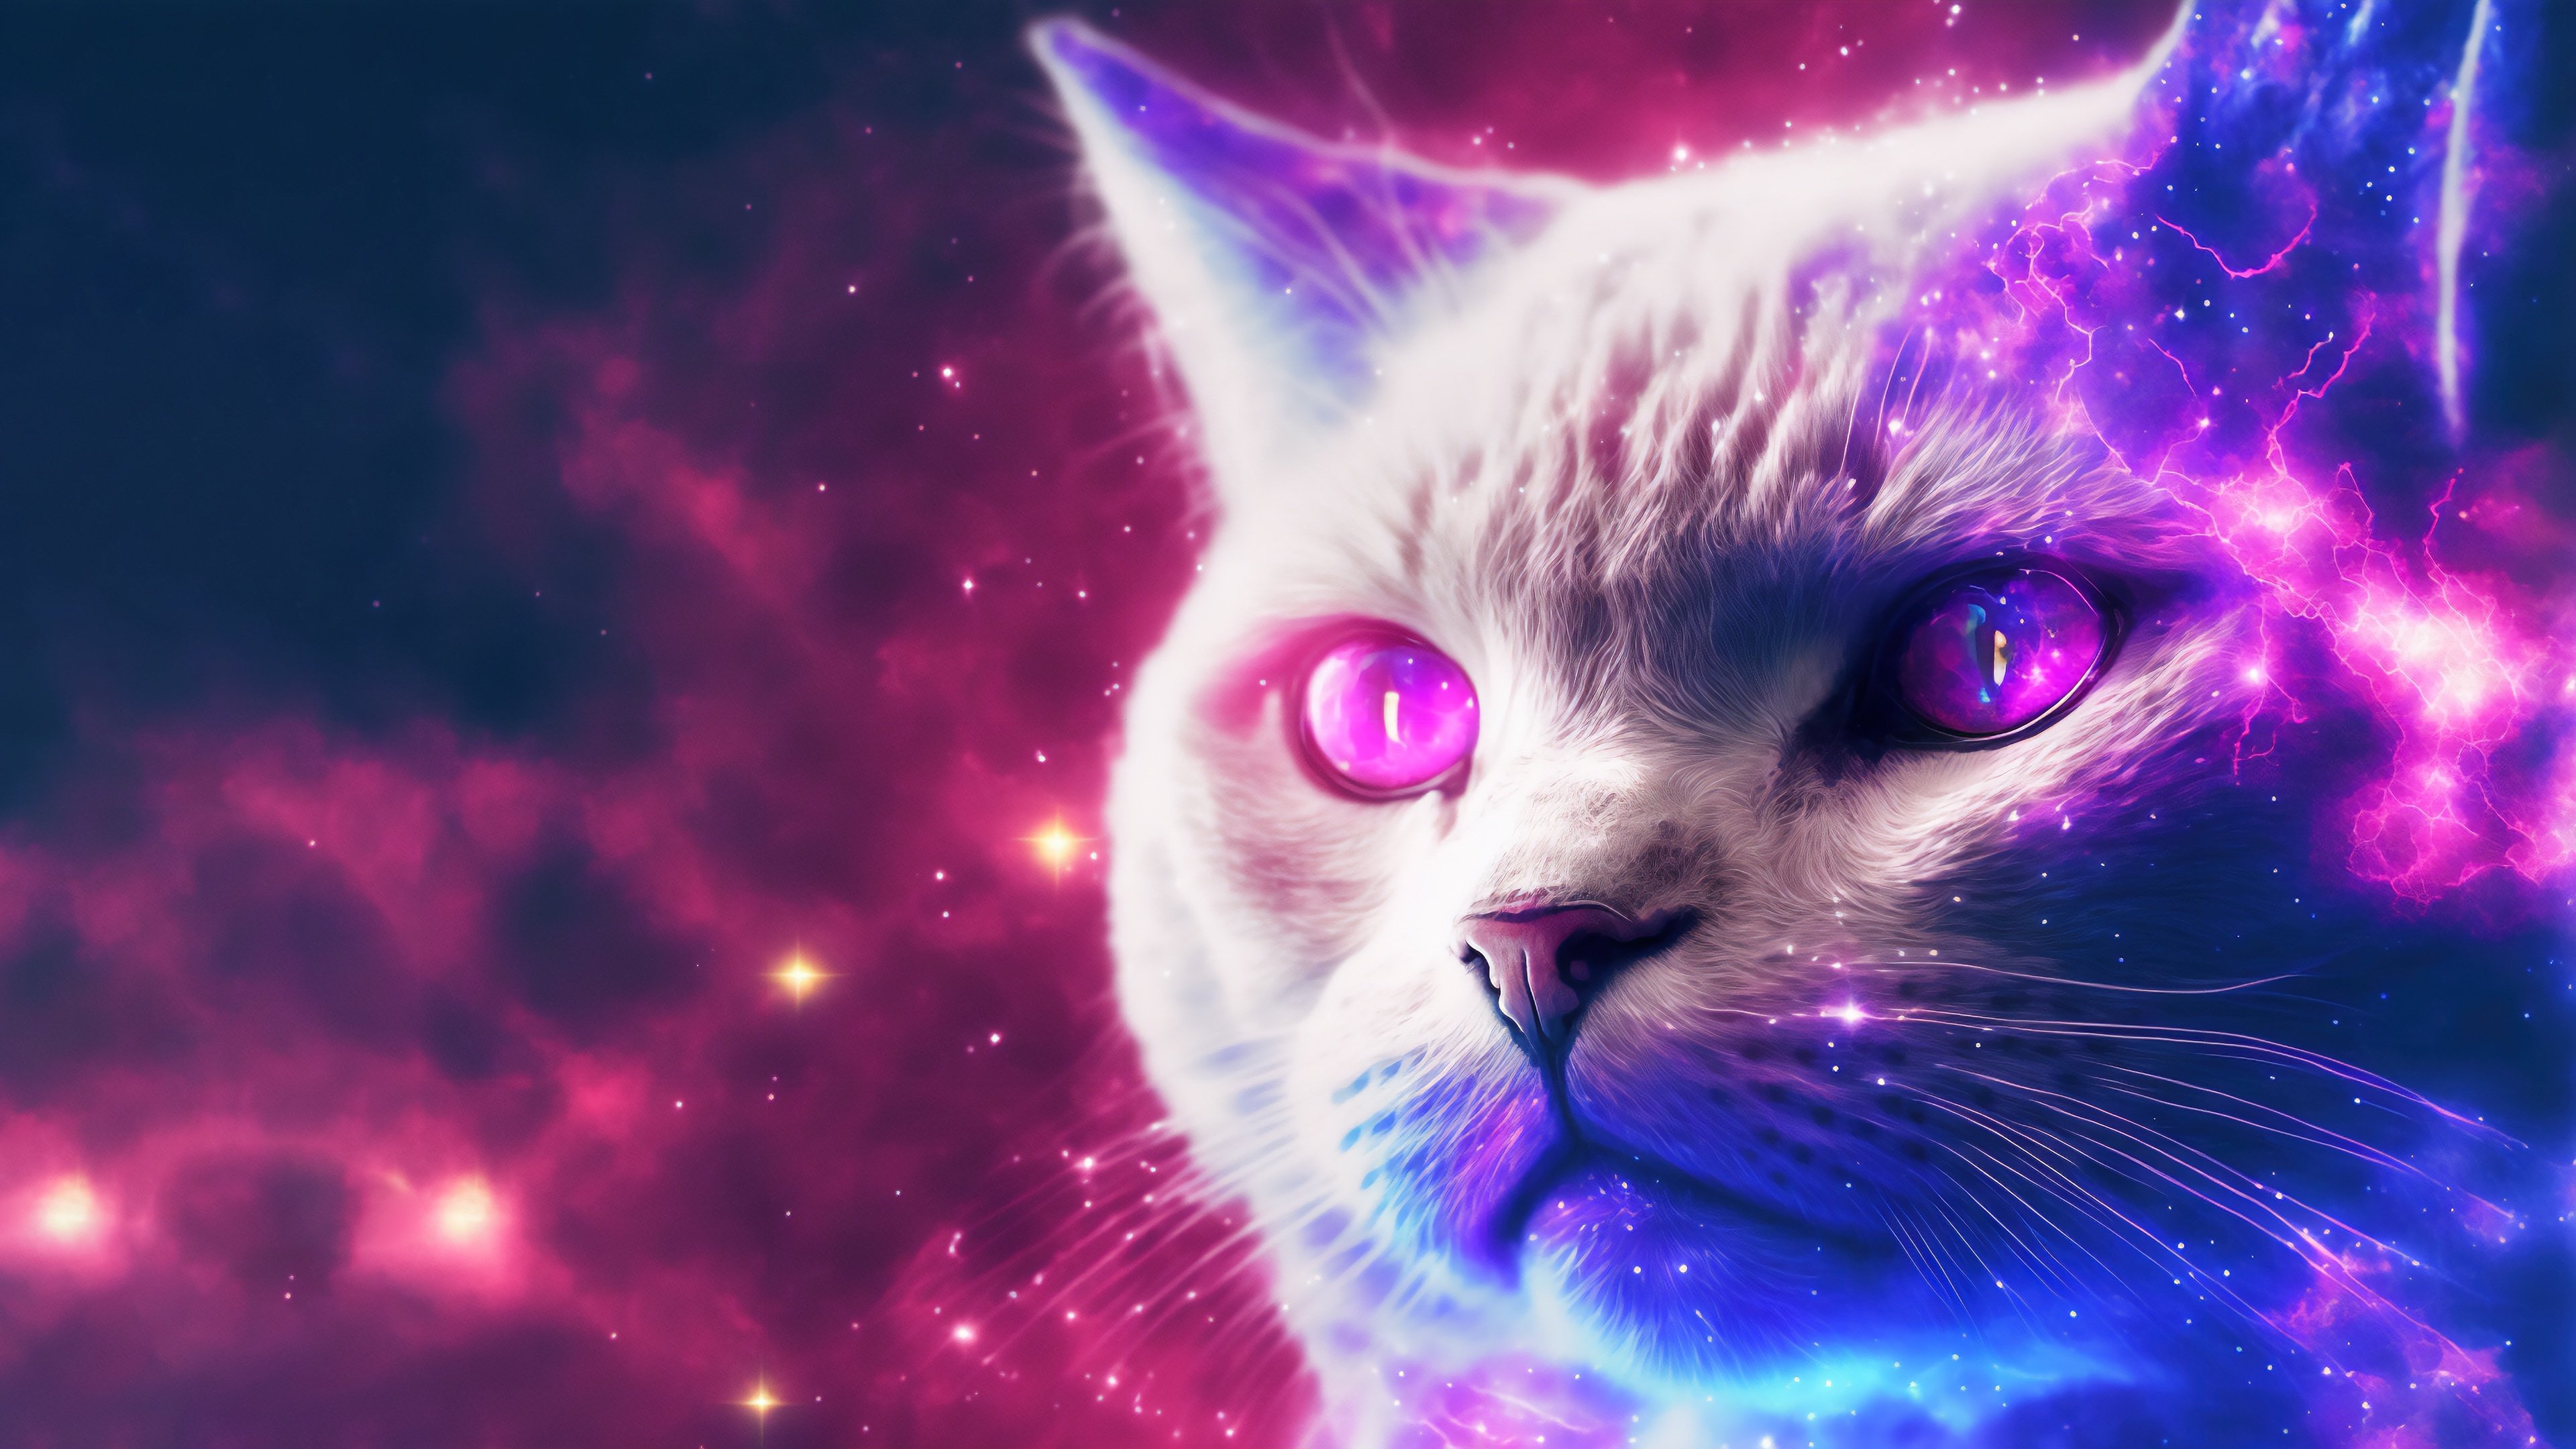 Fondos de pantalla Ilustración de gato con galaxia